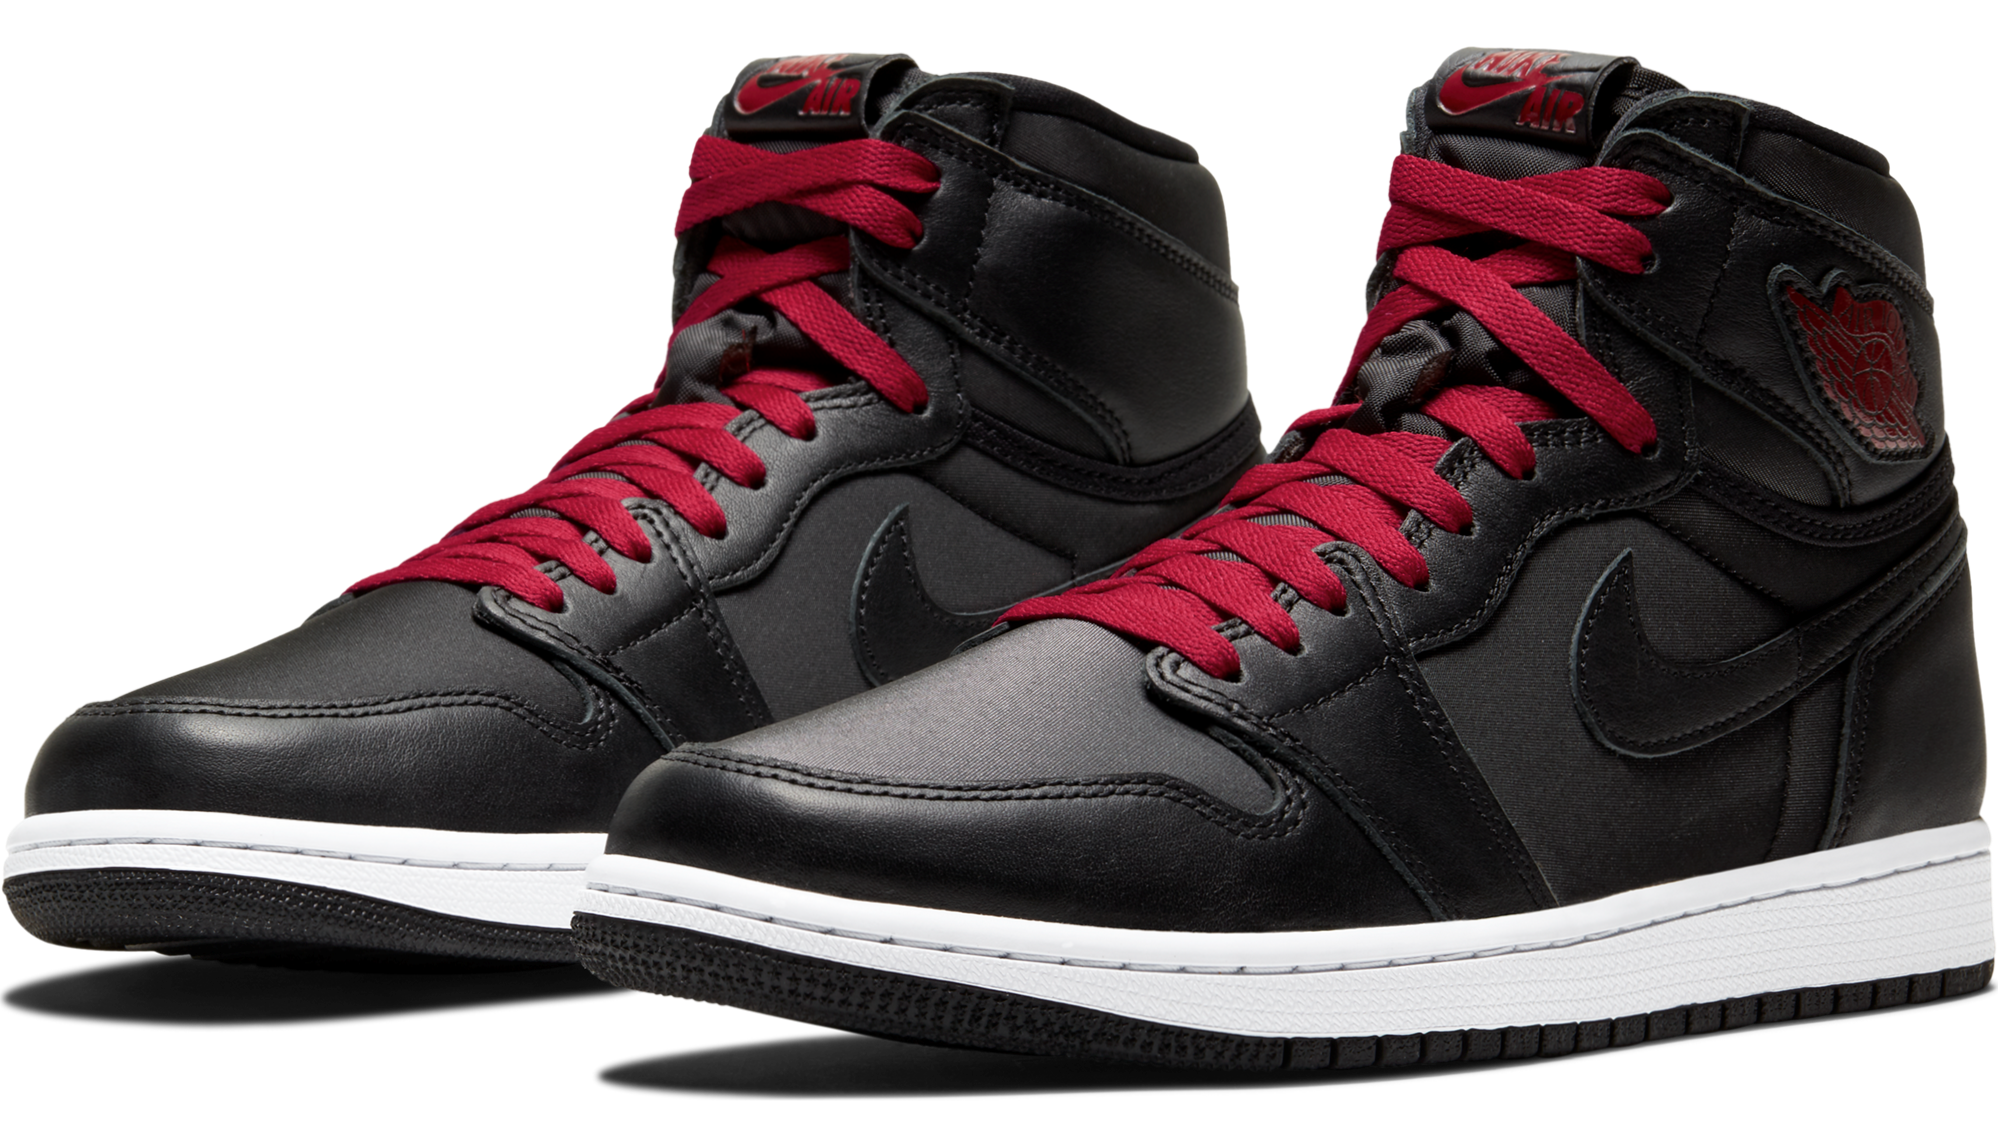 Air Jordan 1 OG Black / Gym Red